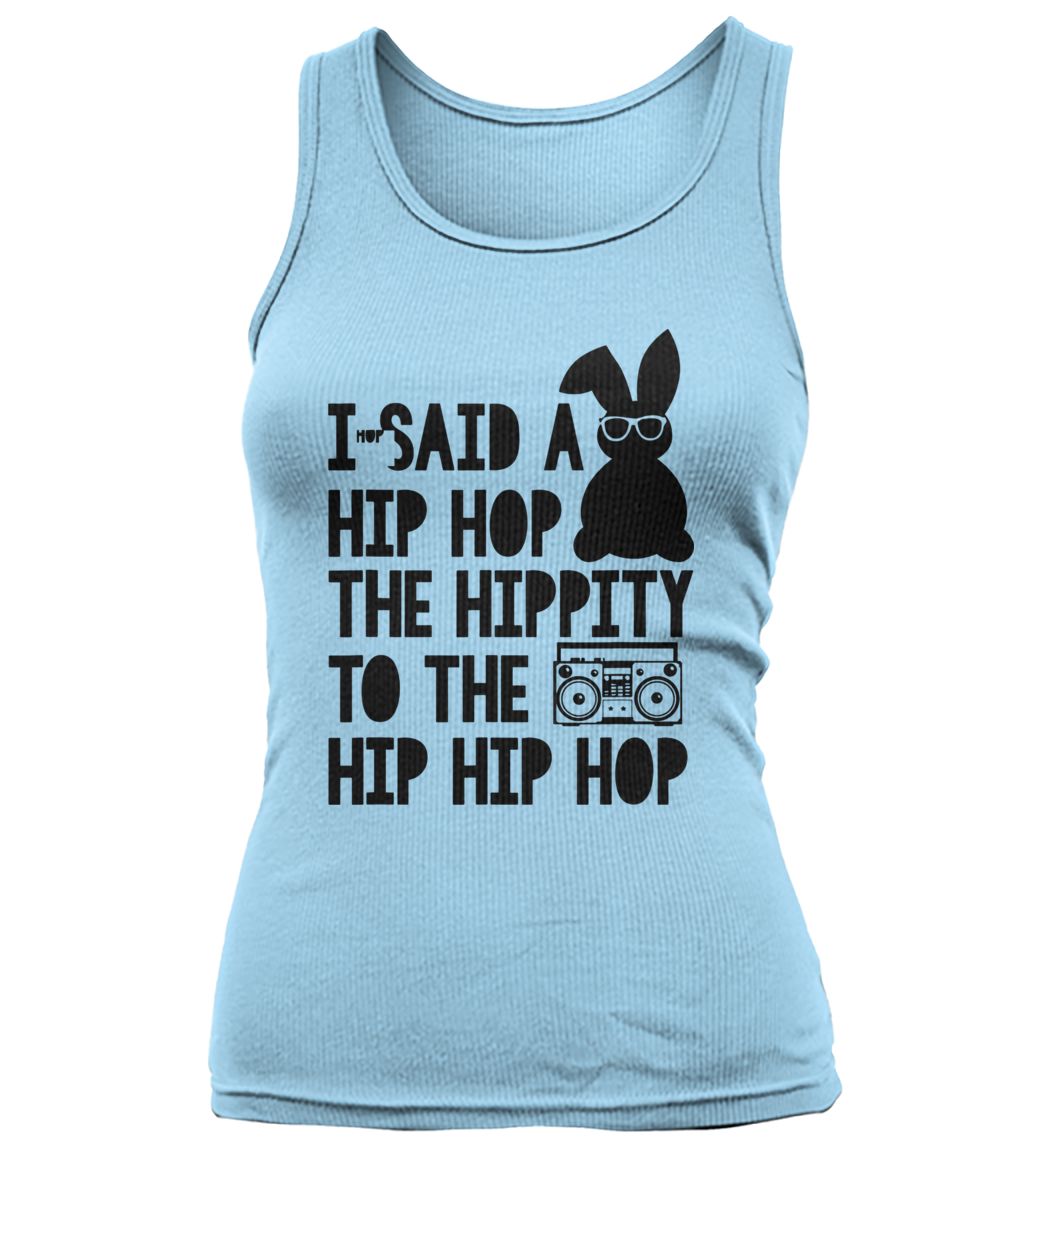 Easter bunny I said a hip-hop hippity to the hip hip hop women's tank top